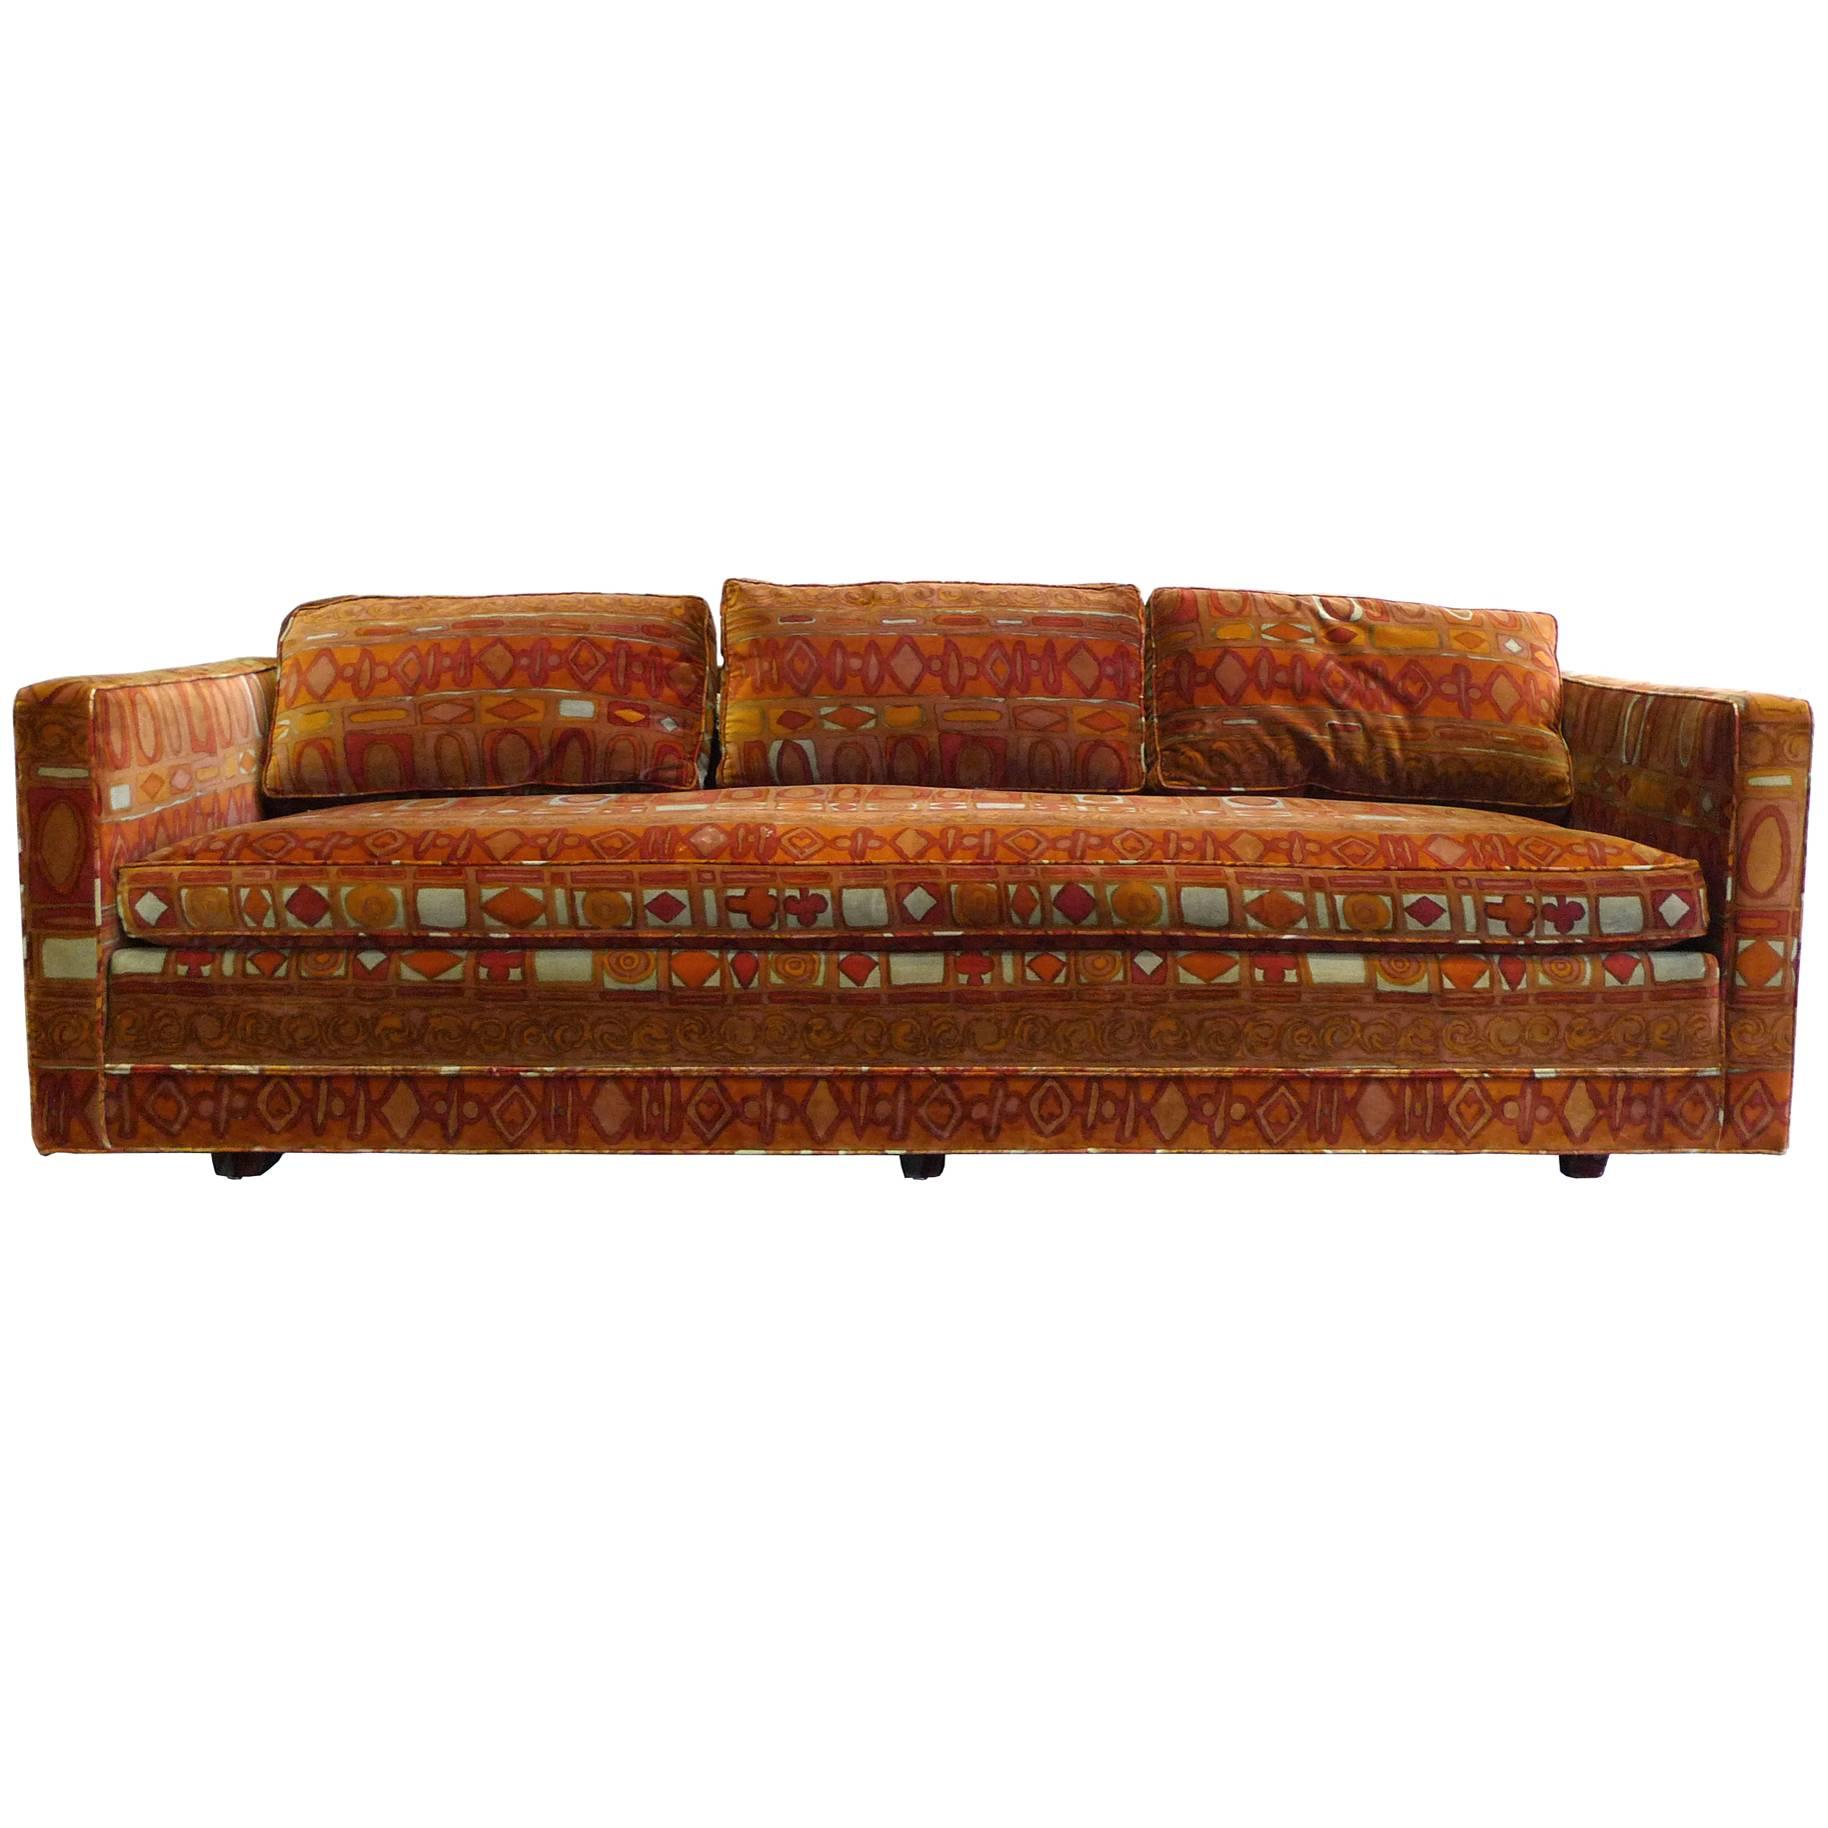 Midcentury Dunbar Attributed Sofa in Jack Lenor Larsen Fabric